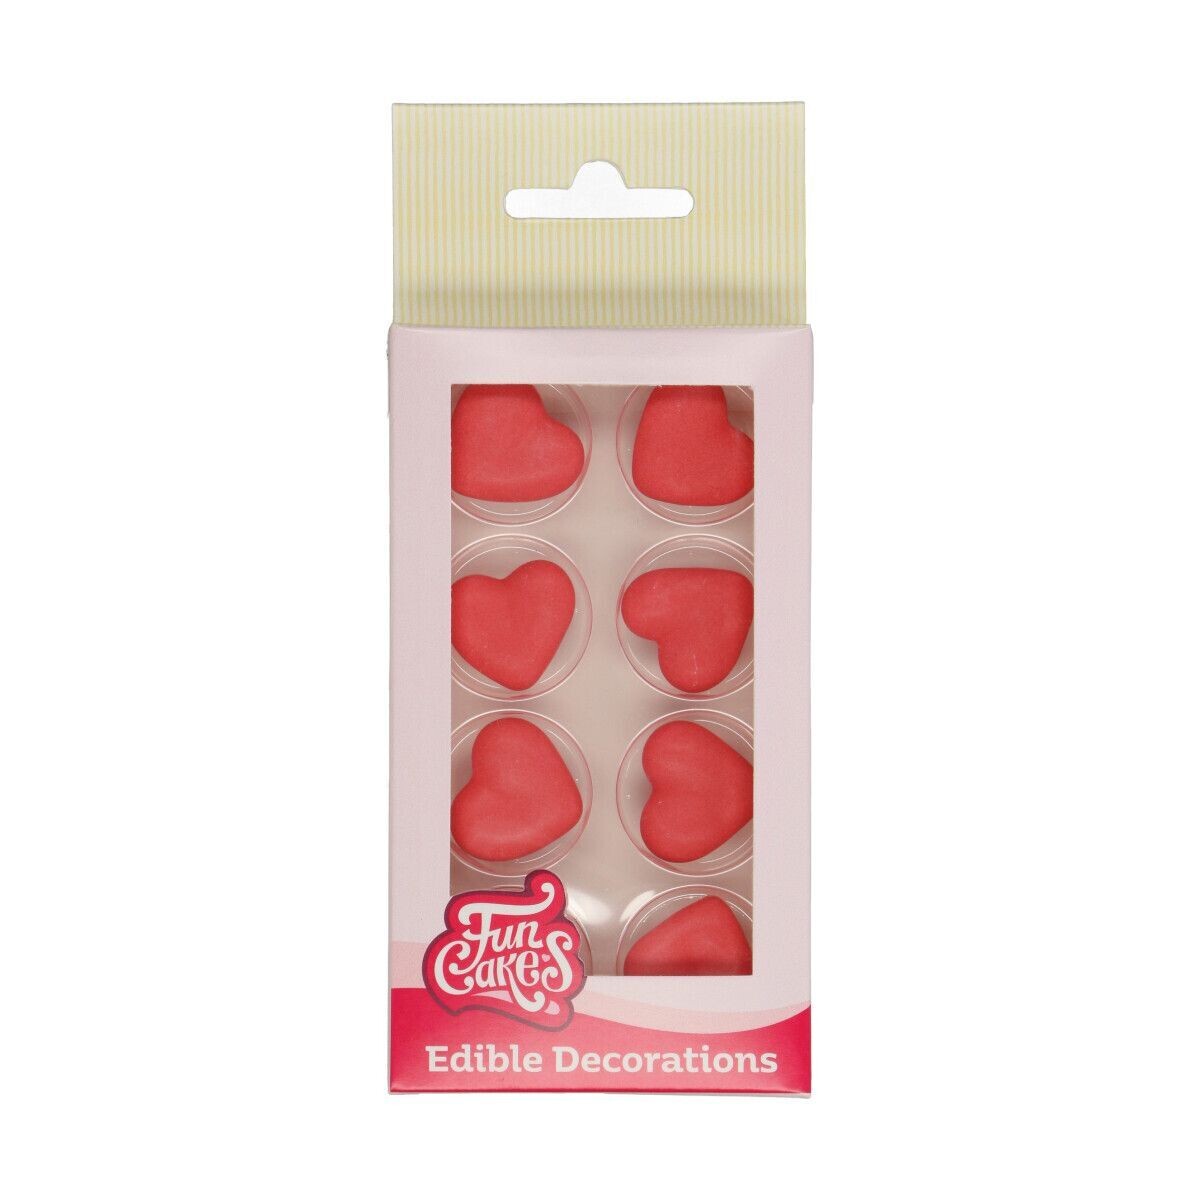 FunCakes Sugar Decorations -RED HEARTS 8τμχ - Βρώσιμα Διακοσμητικά Ζαχαρωτά Κόκκινες Καρδιές